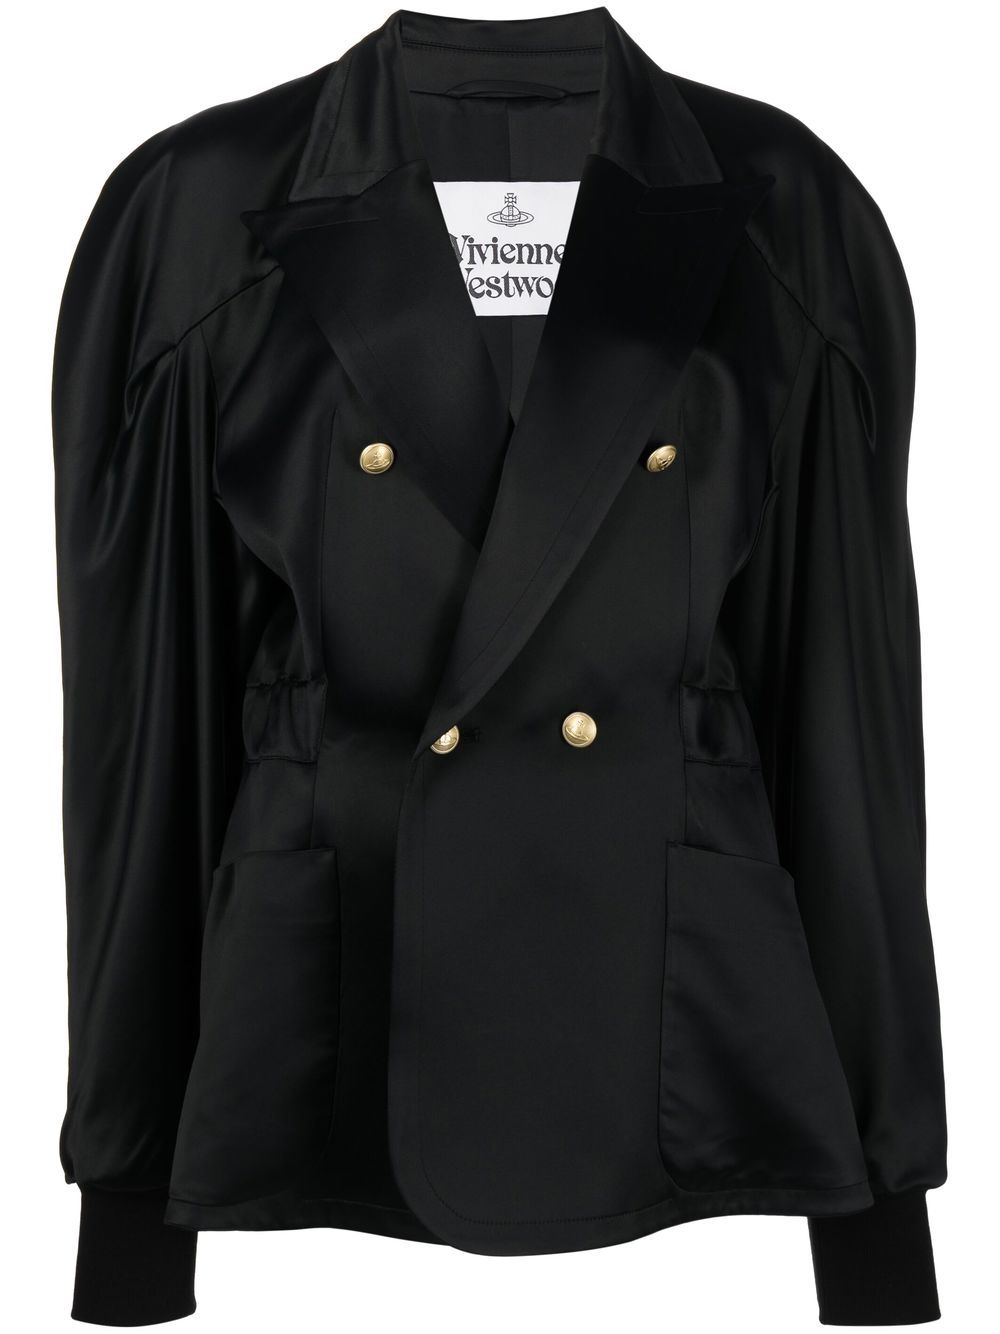 Vivienne Westwood double-breasted jacket - Black